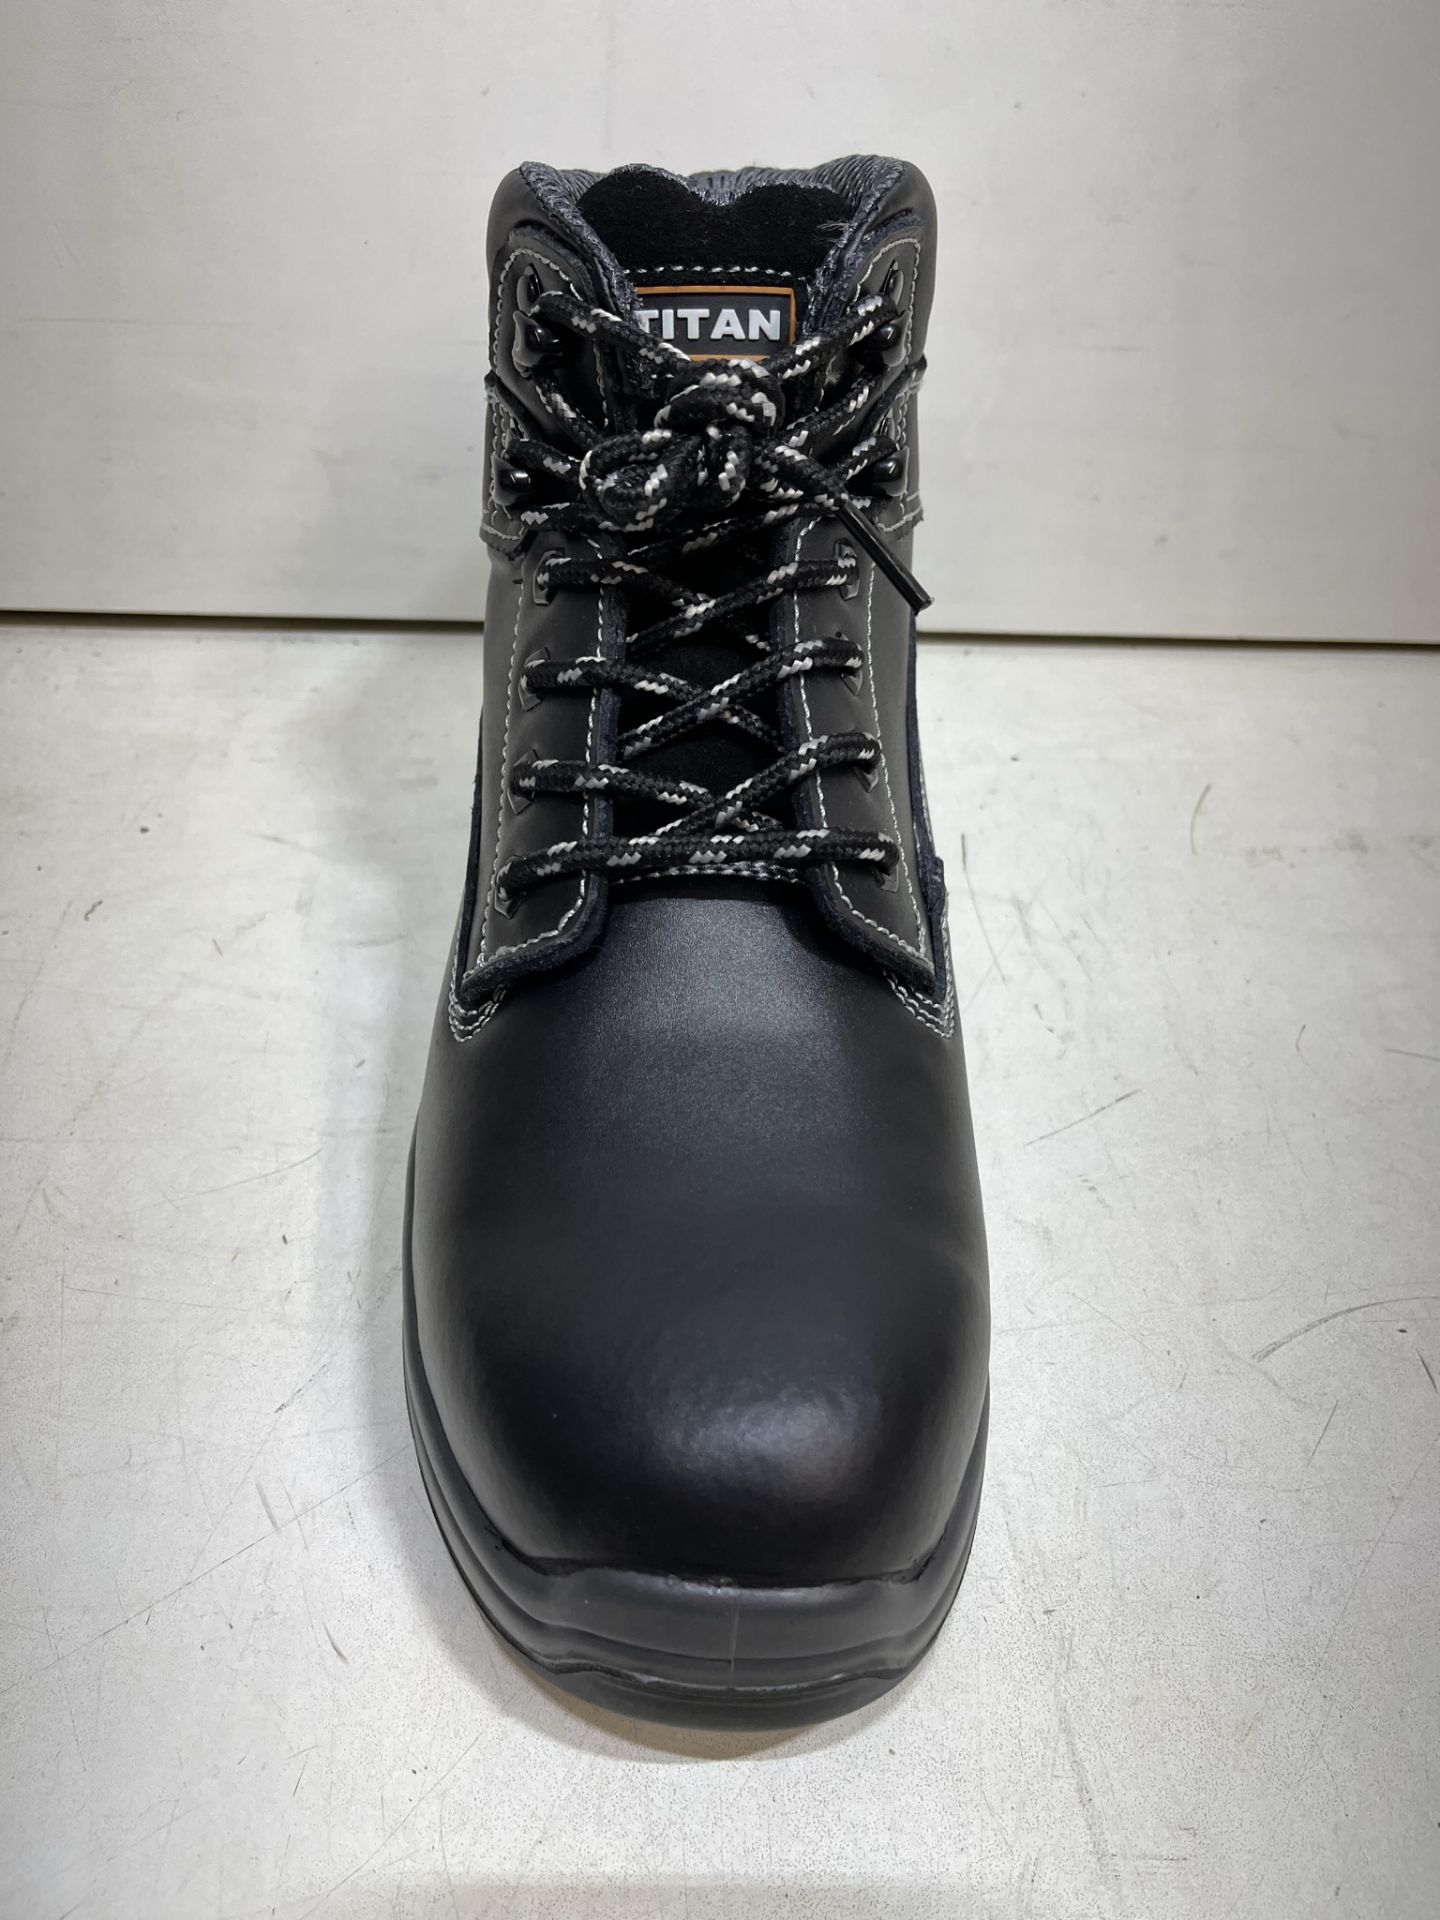 Titan Holton Black Steel Toe Cap Safety Boots | UK 7 - Image 3 of 4